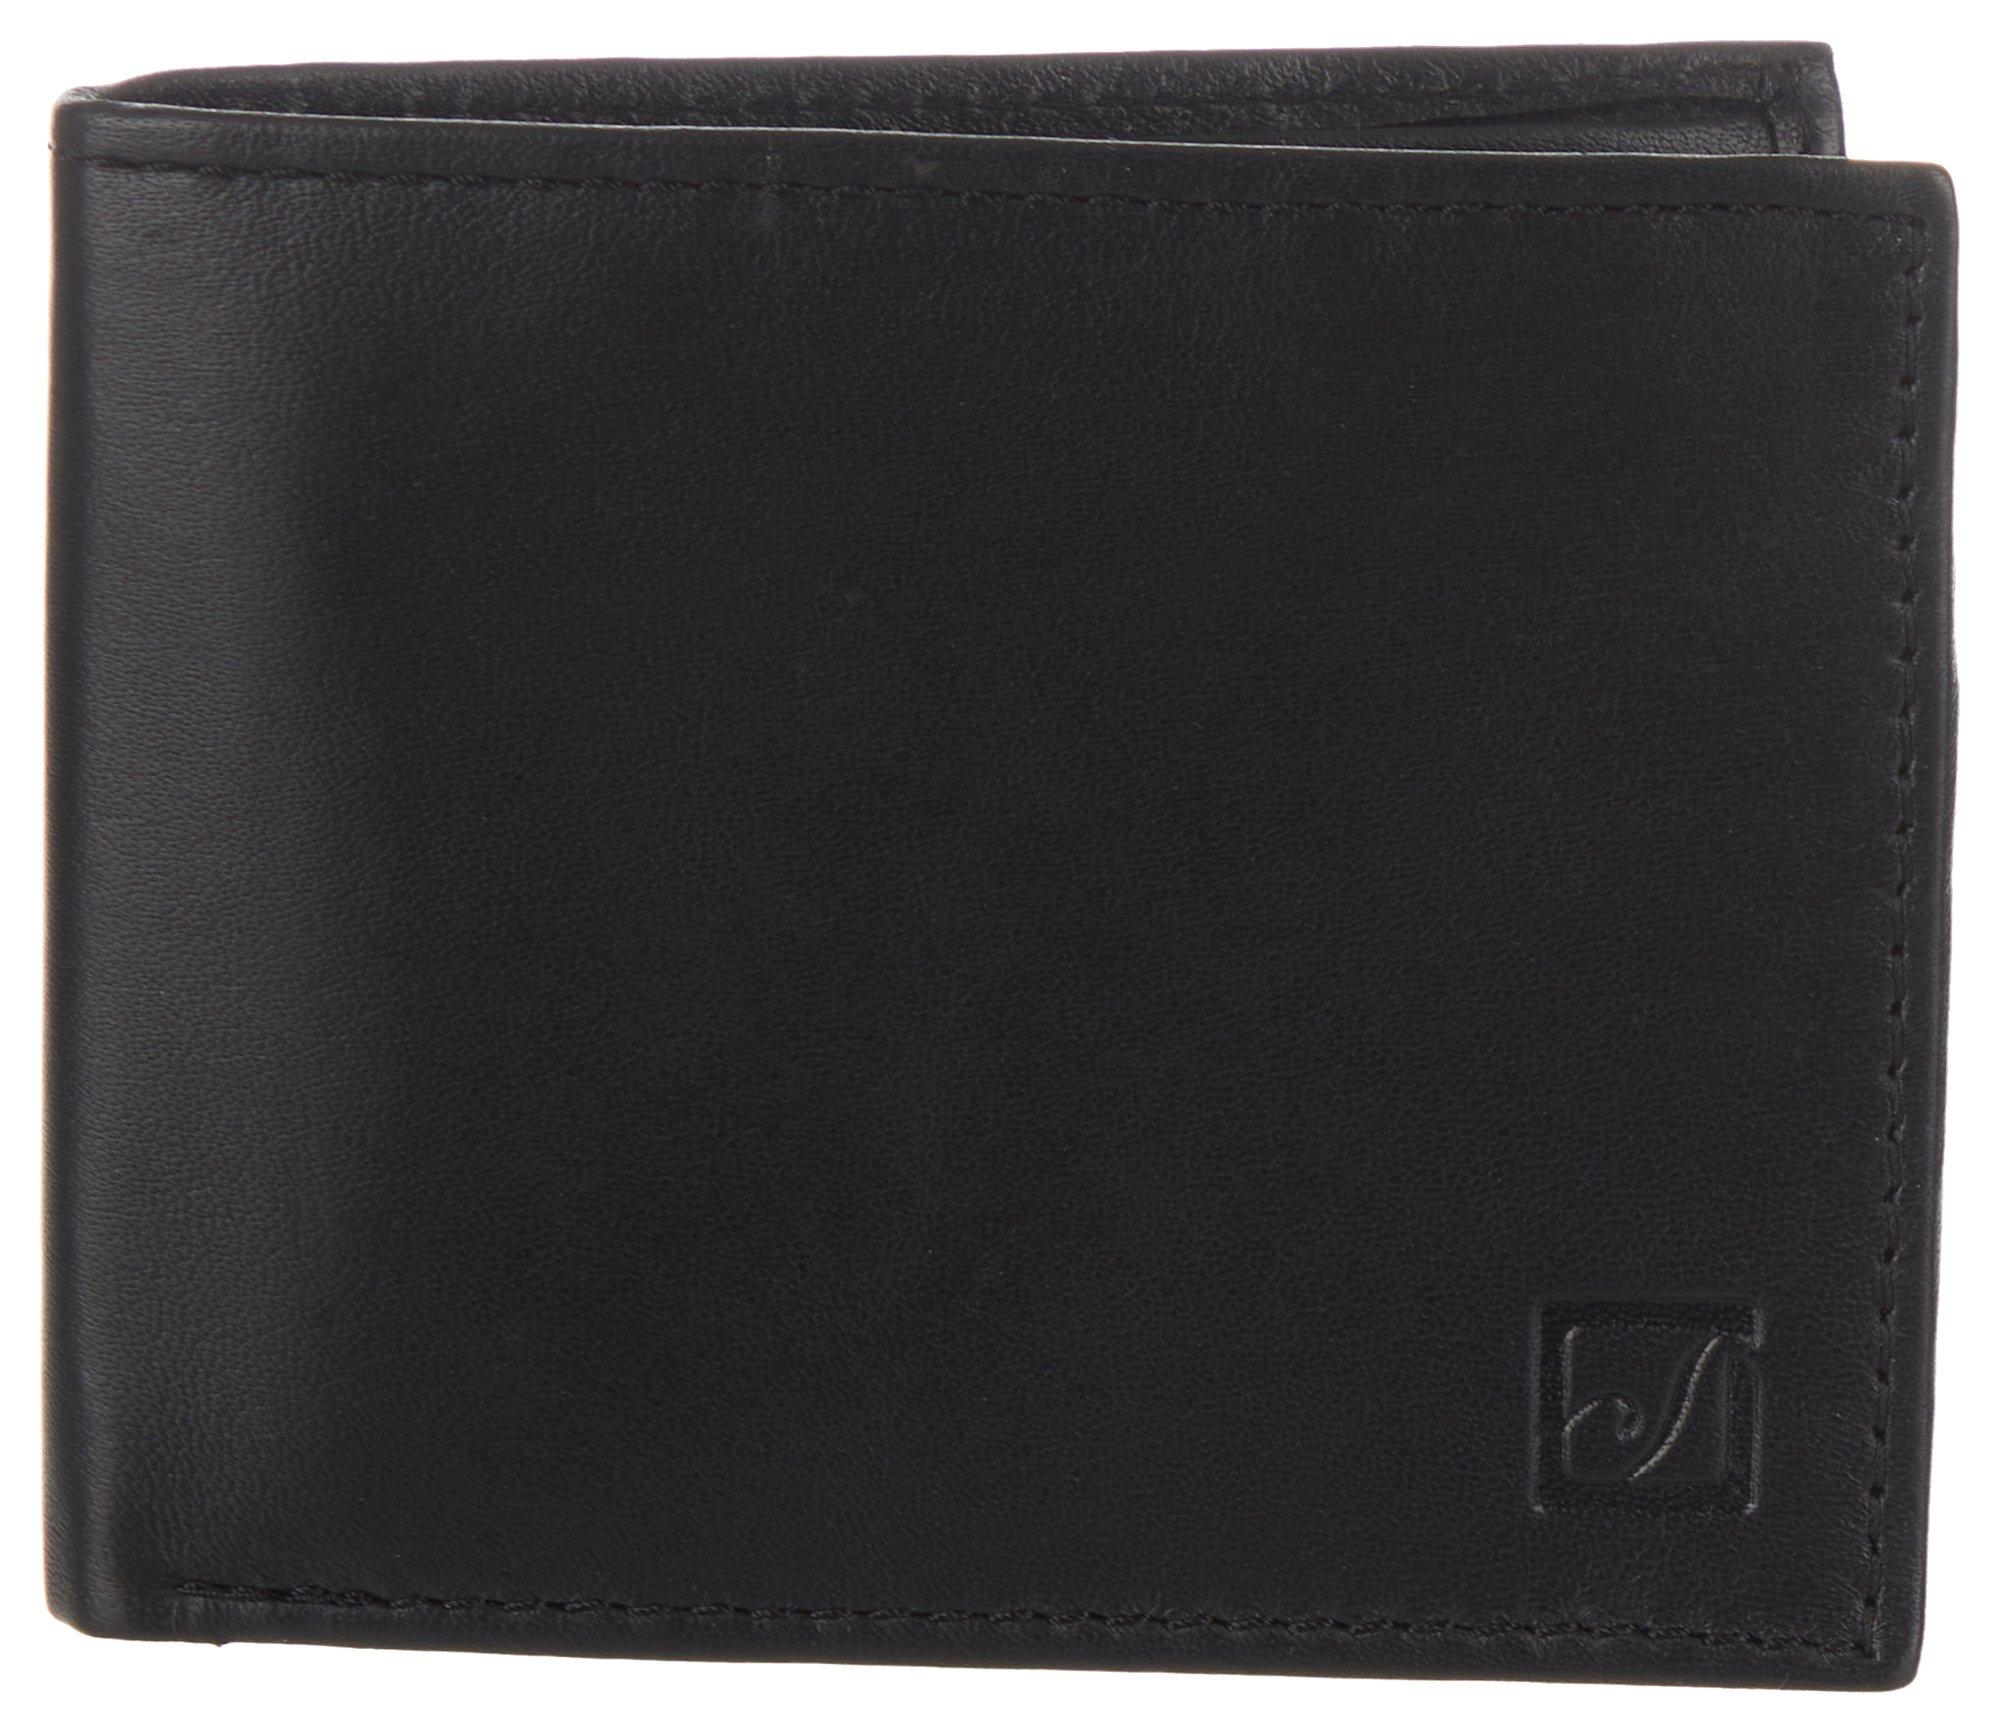 Stone Mountain Men's RFID Leather Wallet, Brown